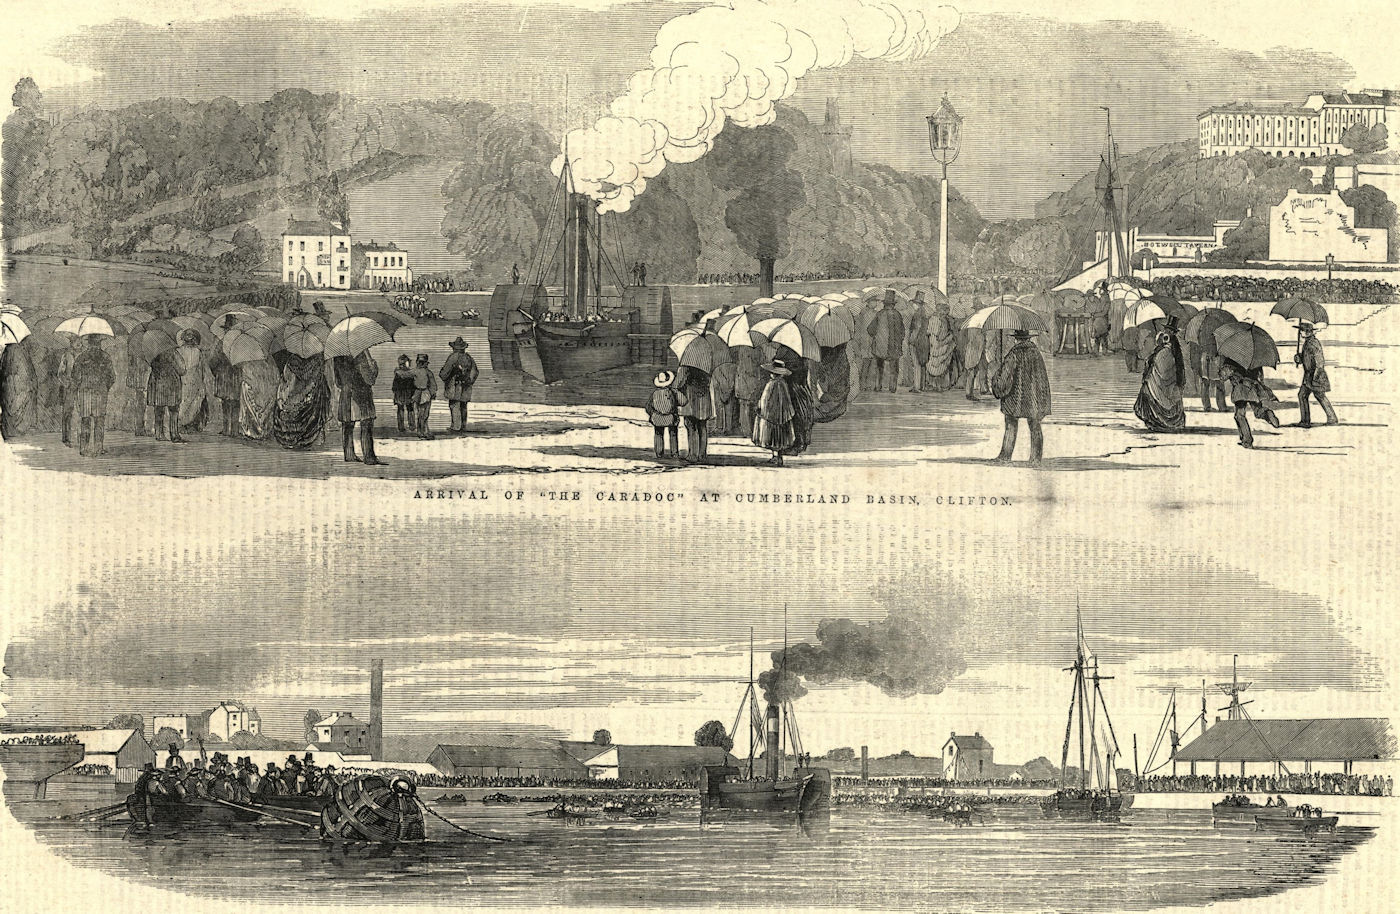 Lord Raglan's funeral. The Caradoc arriving at Cumberland Basin, Clifton 1855